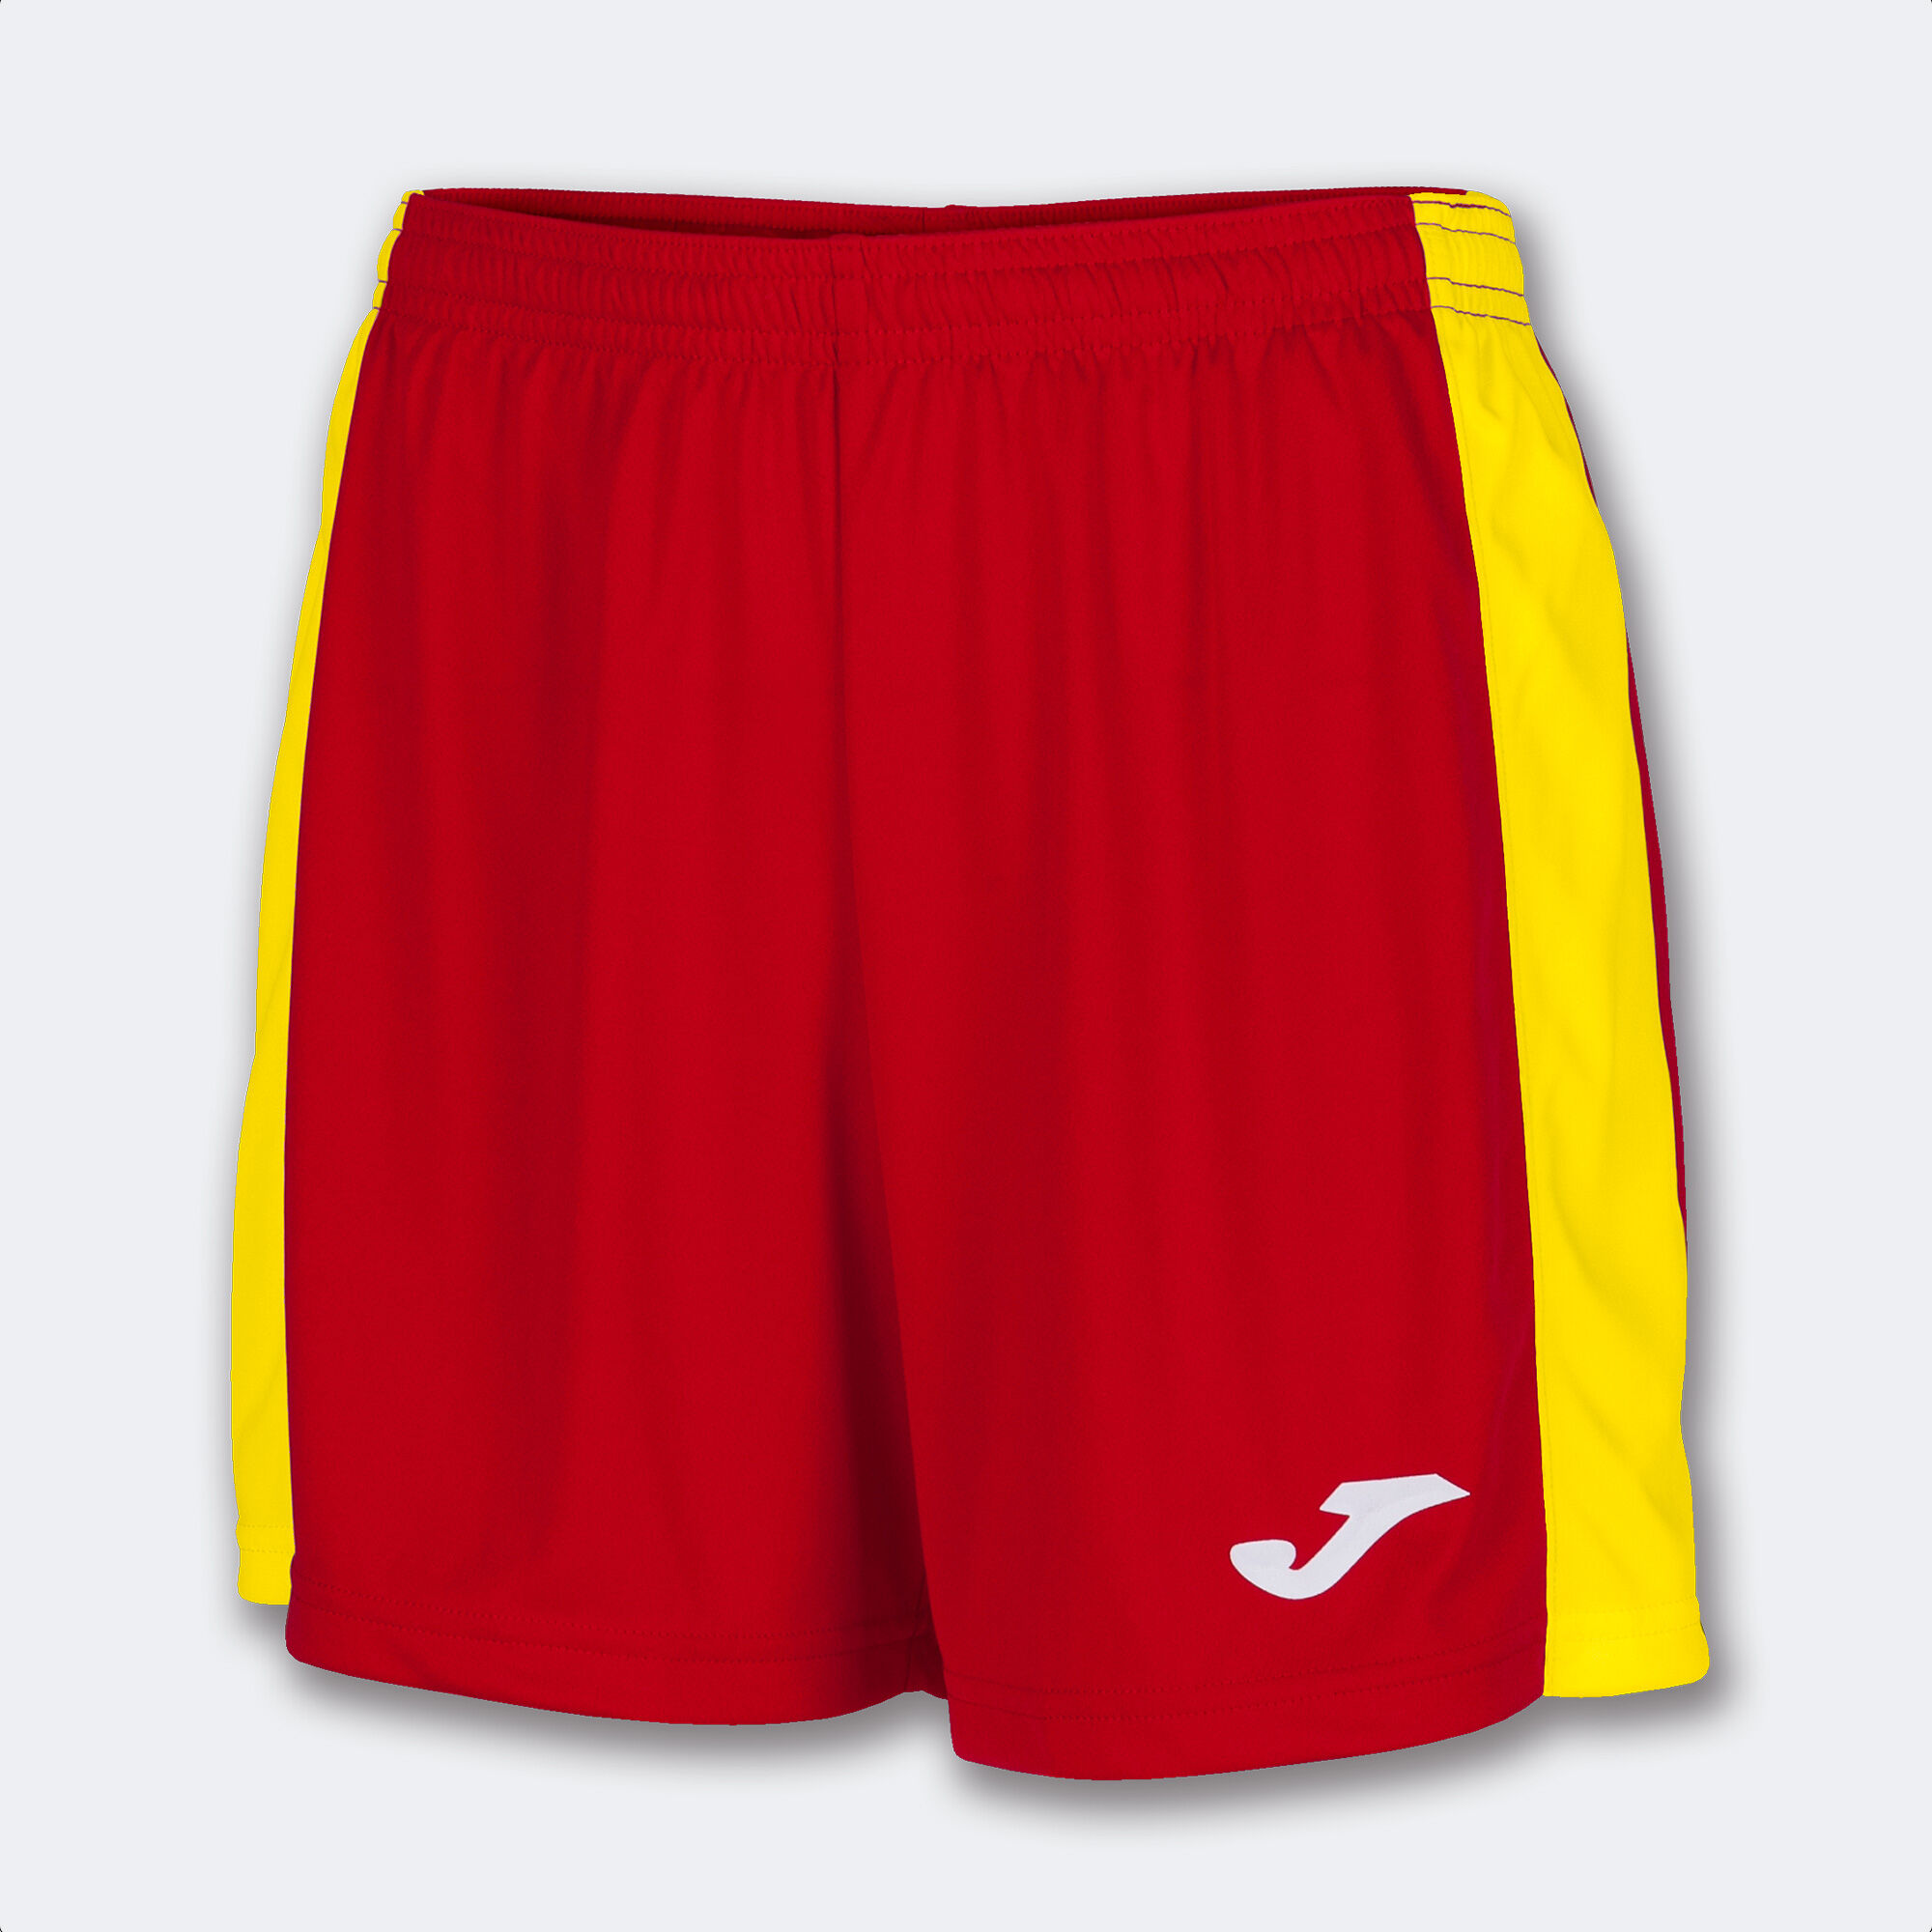 Shorts woman Maxi red yellow